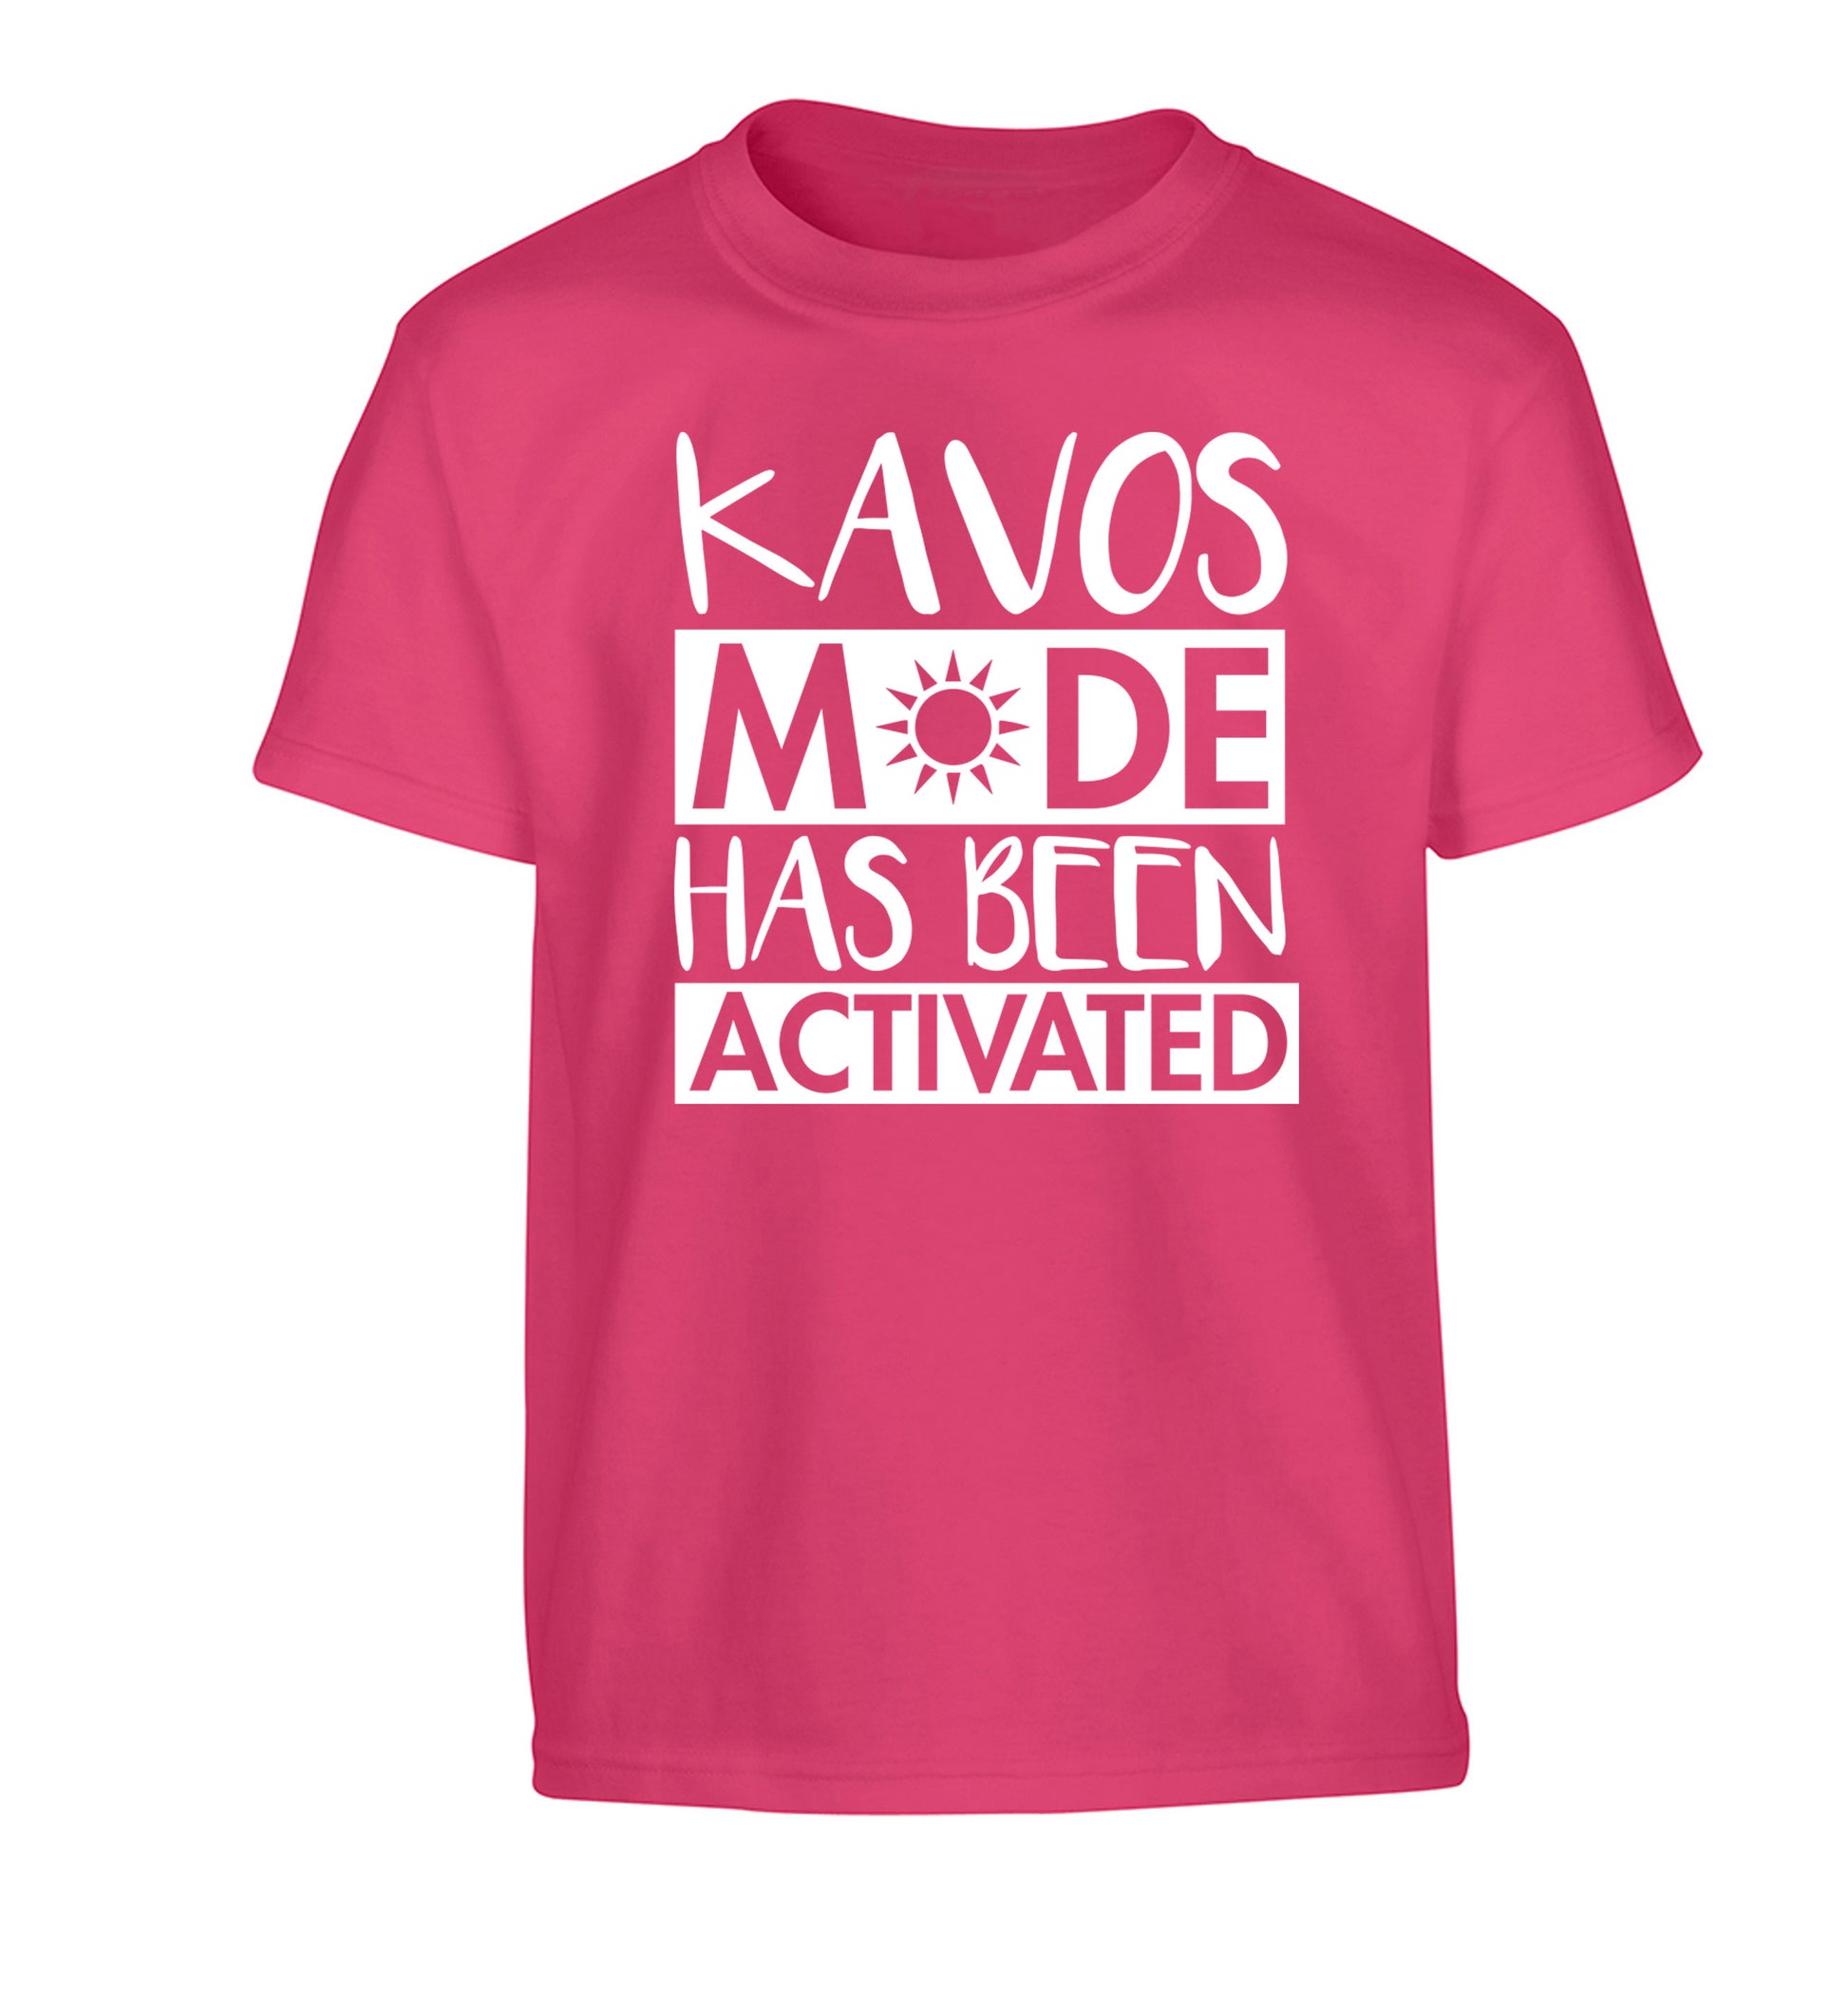 Kavos mode has been activated Children's pink Tshirt 12-14 Years